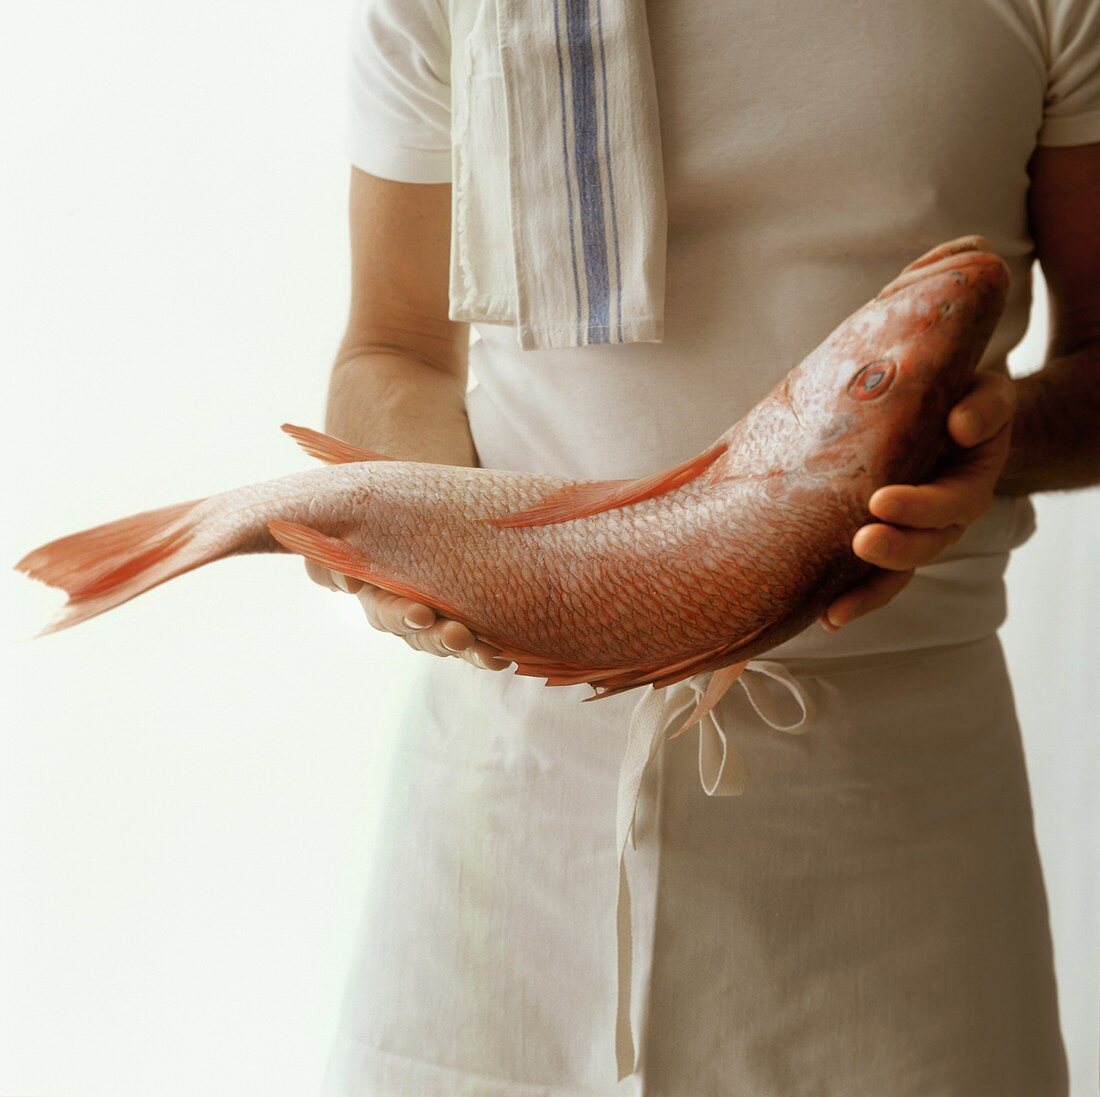 Koch hält grossen Fisch (Schnapper) in den Händen